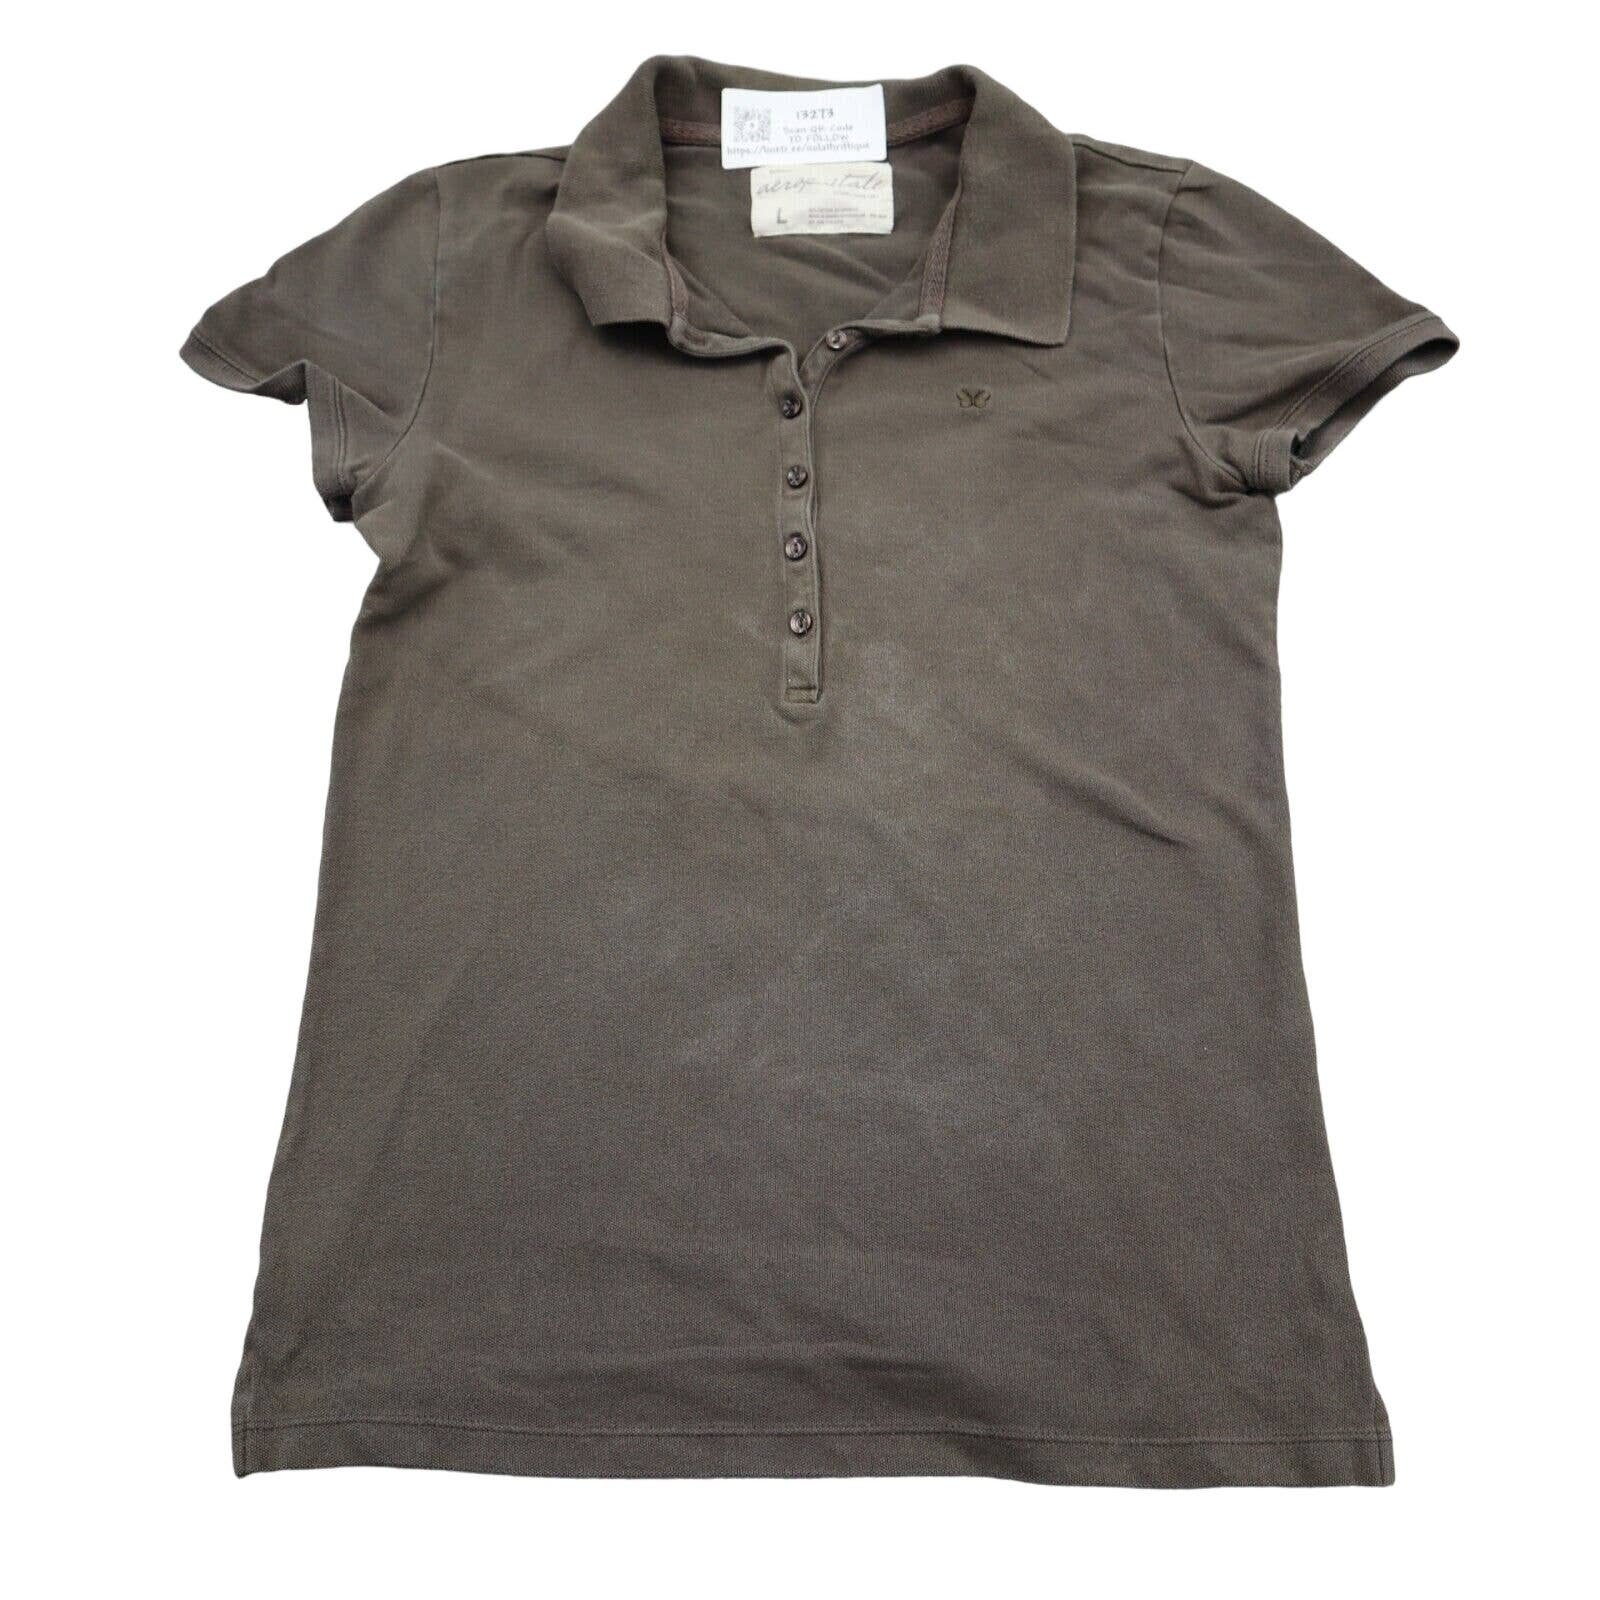 The Best Seller Aeropostale Shirt Womens L Brown Cotton